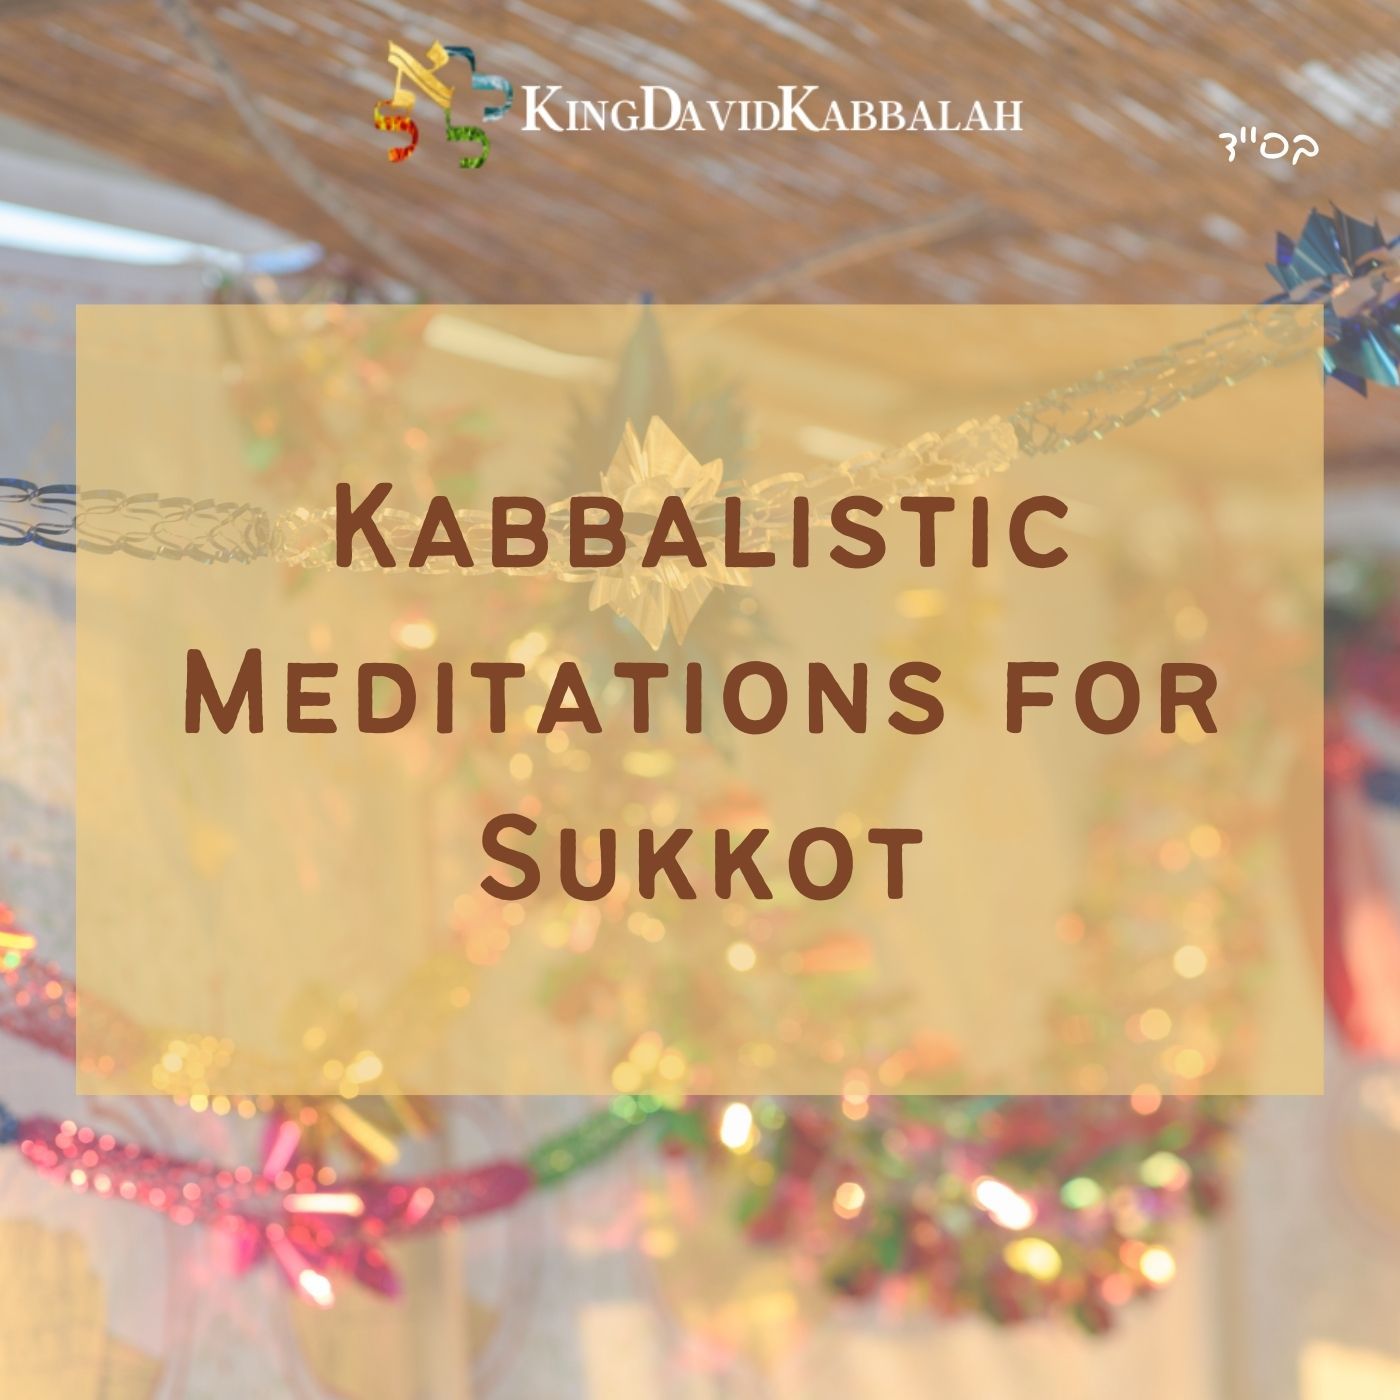 Kabbalistic Meditations for Sukkot